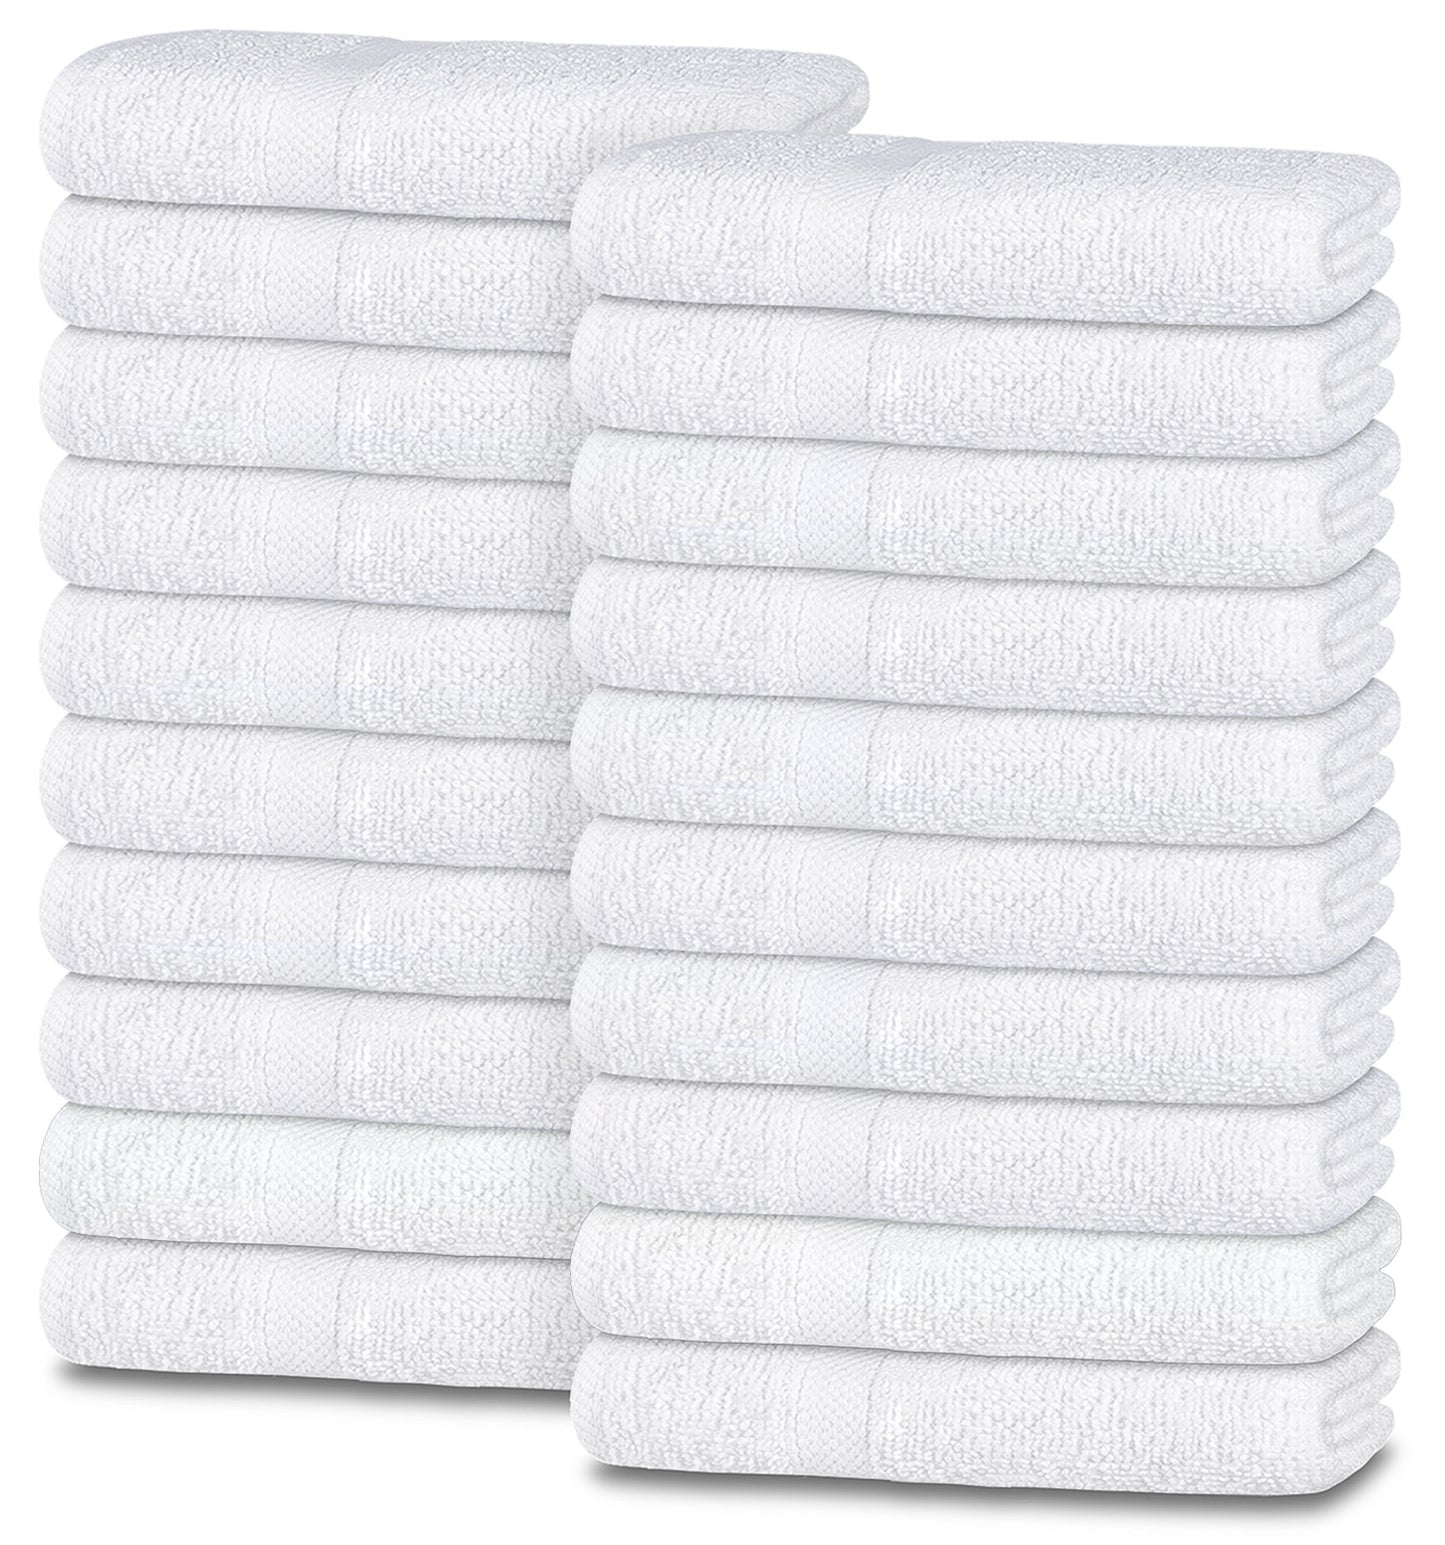 24pack white washcloths